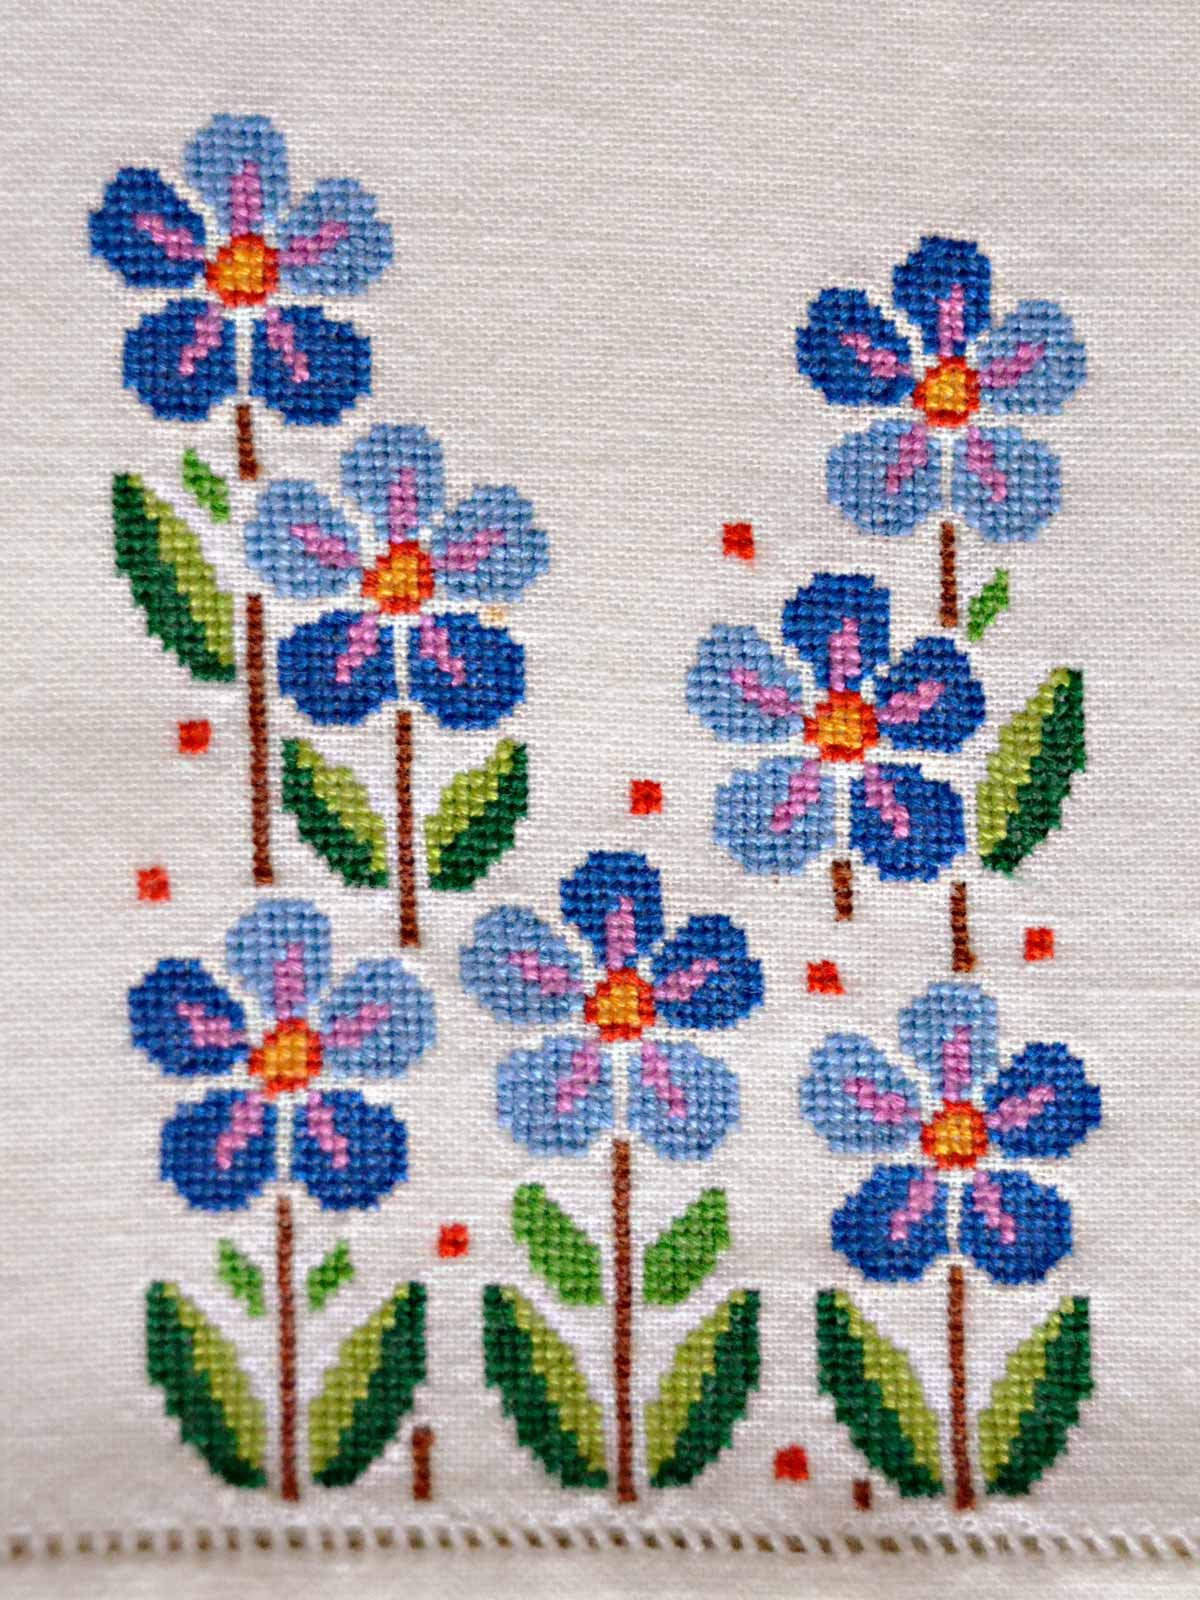 Vintage cross stitch flowers floral